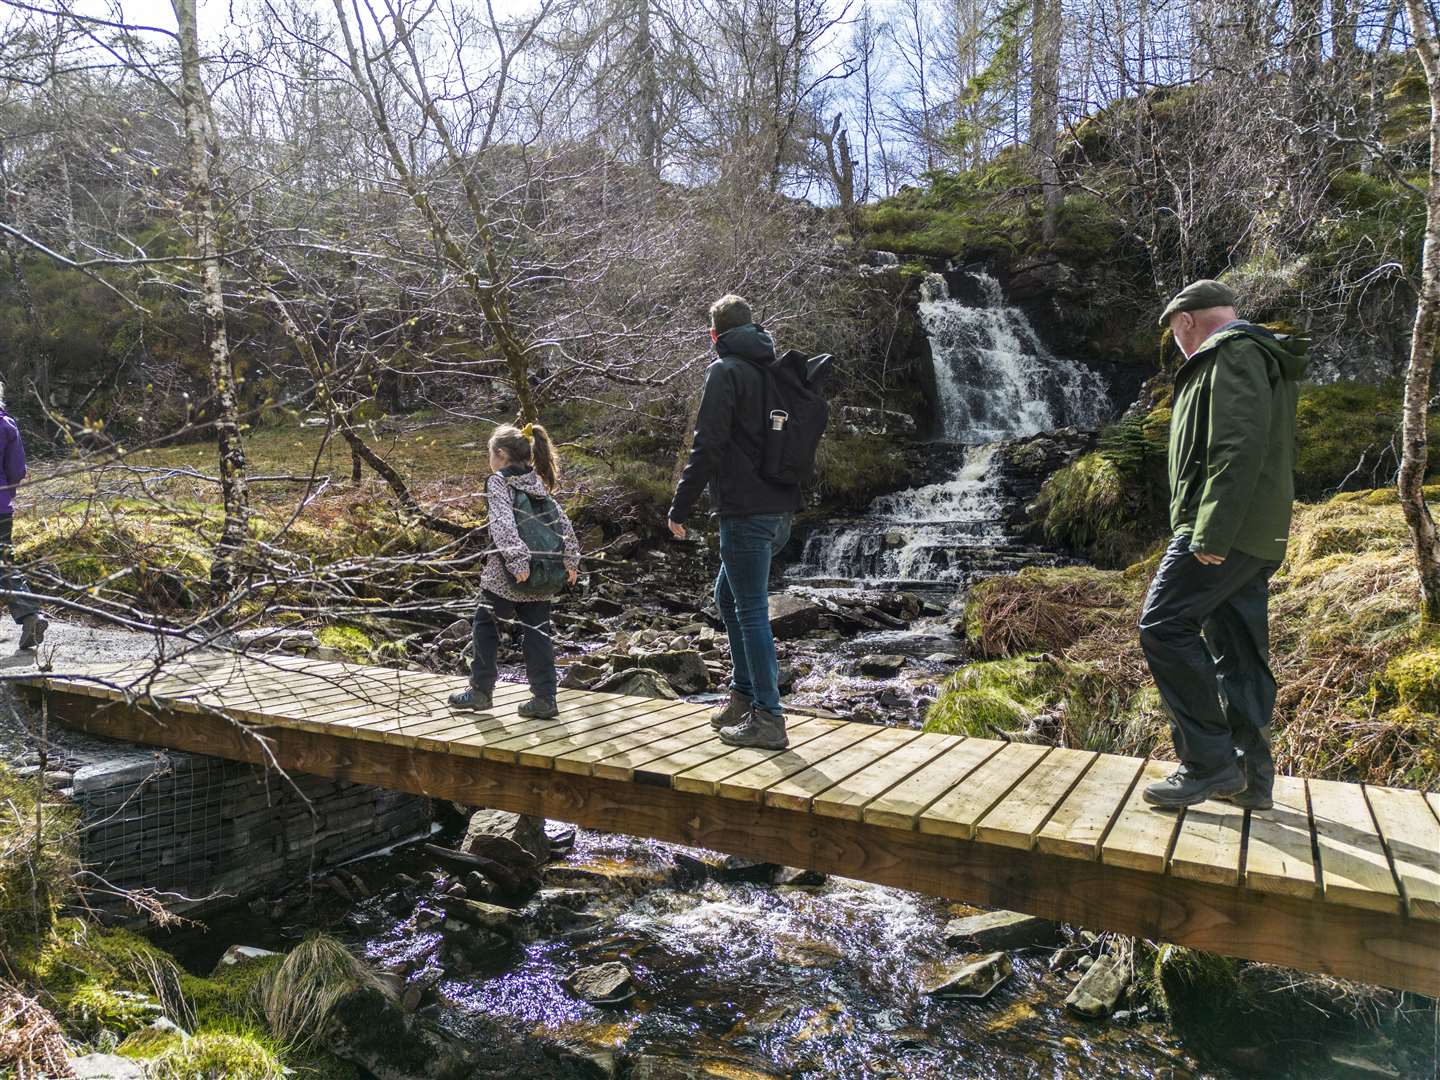 A family enjoying the trail. Ruaridh Mackay, Aidan Bell and Martin Hughes at the bridge. Picture: Peter Devlin